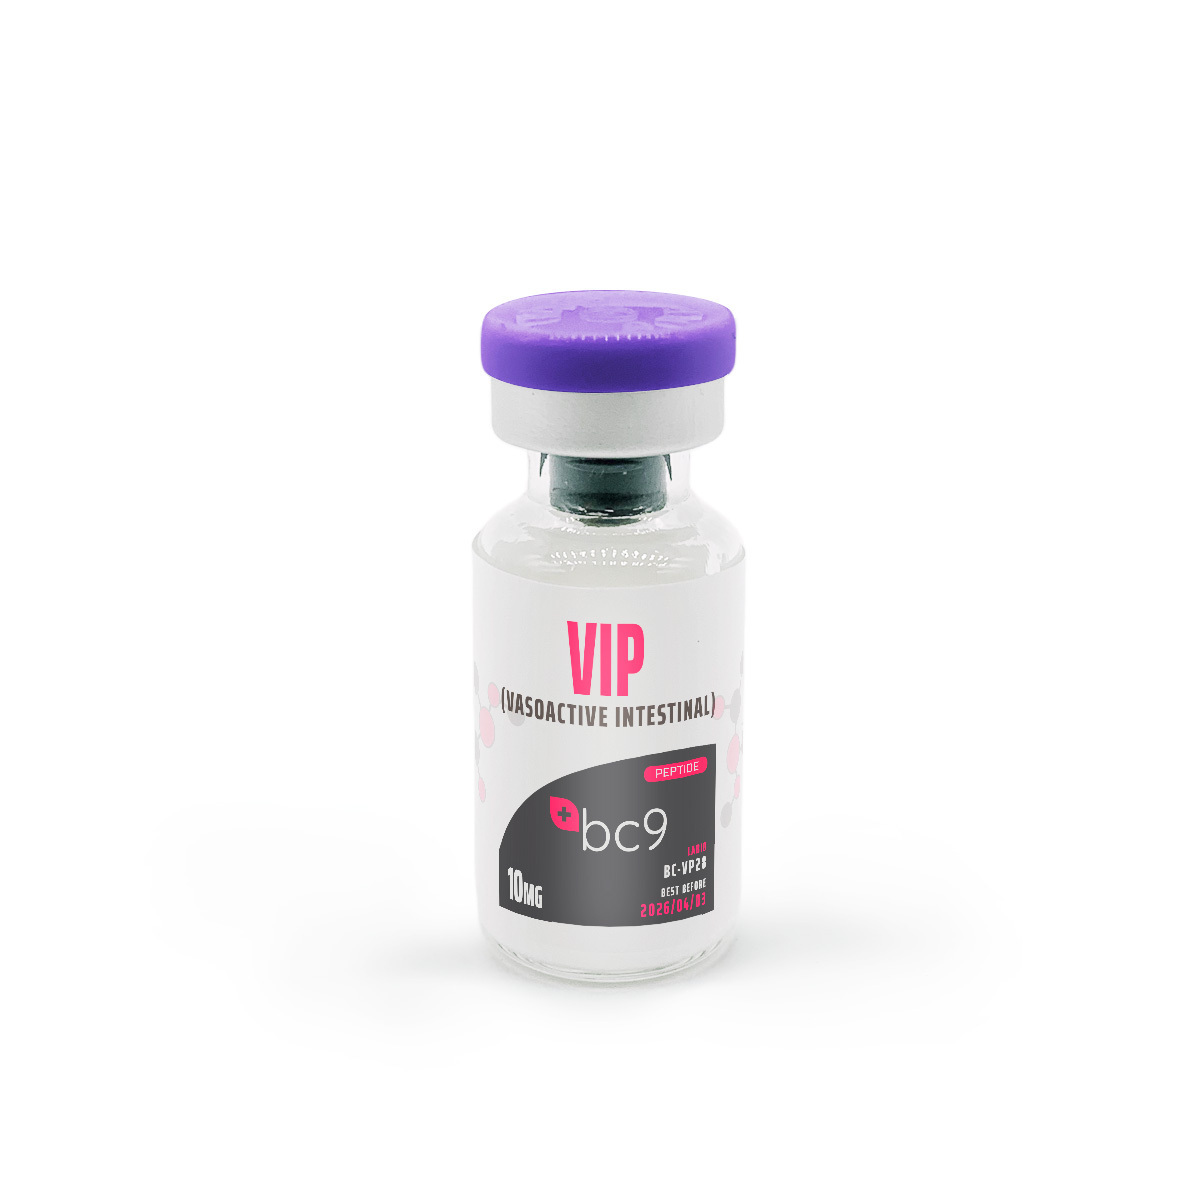 Buy VIP (Vasoactive Intestinal Peptide) for Sale | BC9.org